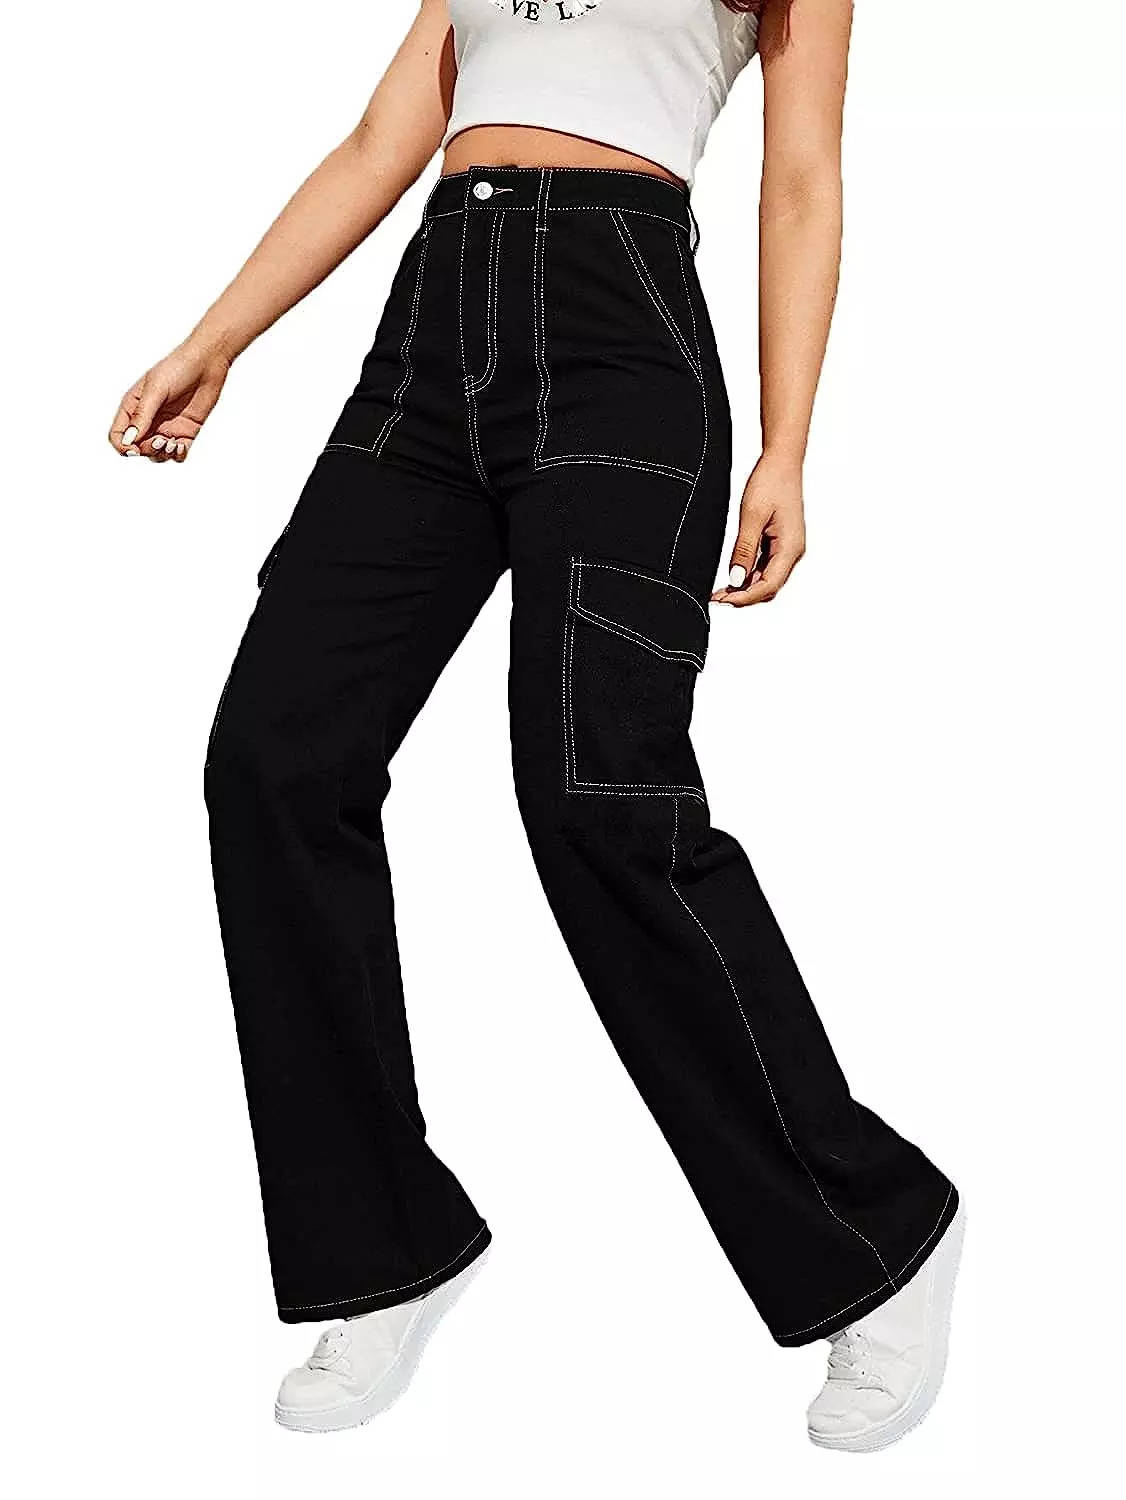 Black Cargo Pants for Women: 6 Stylish Black Cargo Pants for Women for ...